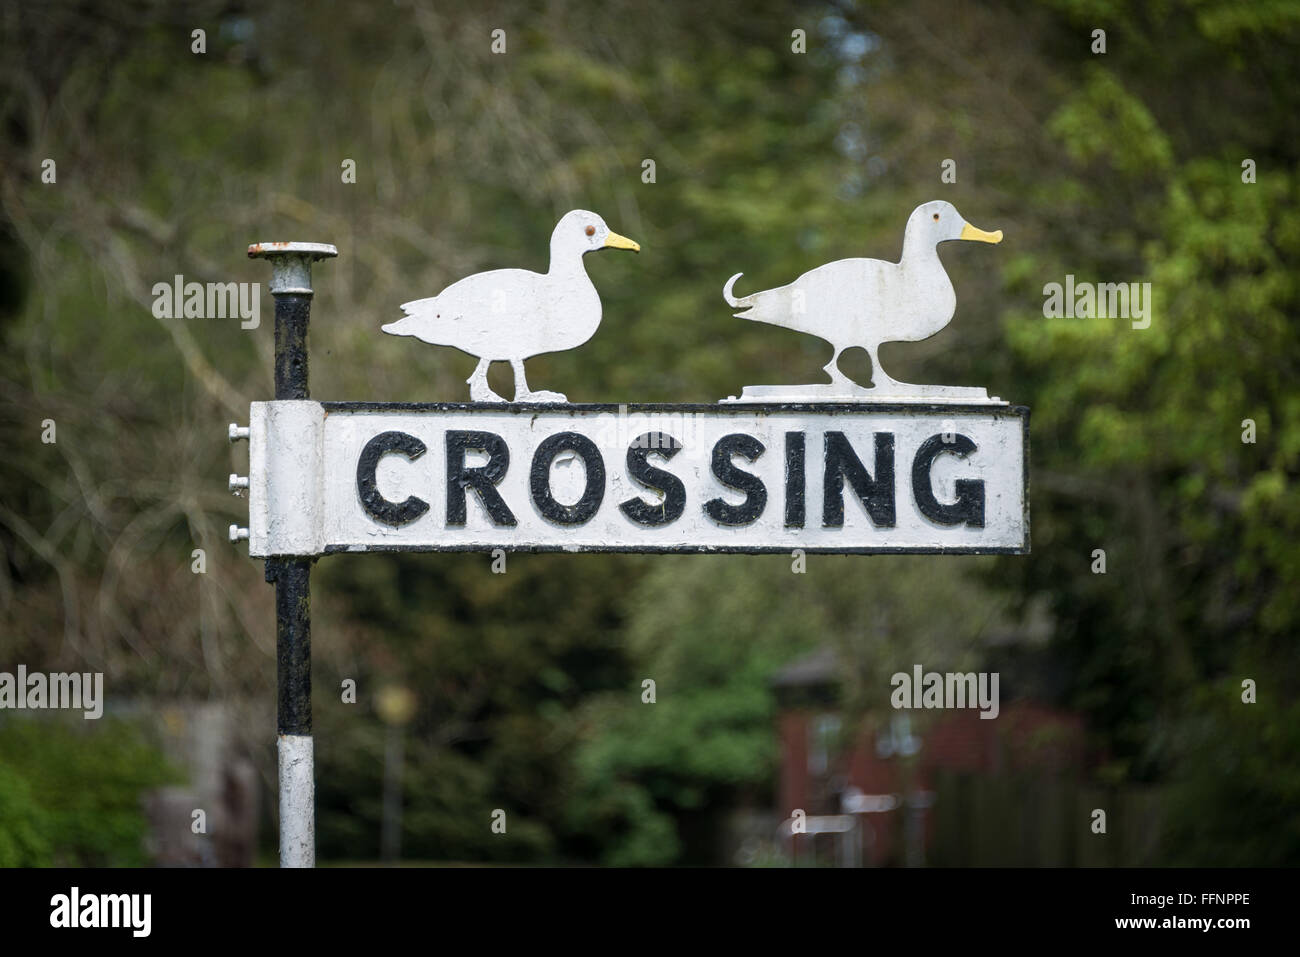 Ducks crossing sign, Norfolk Stock Photo